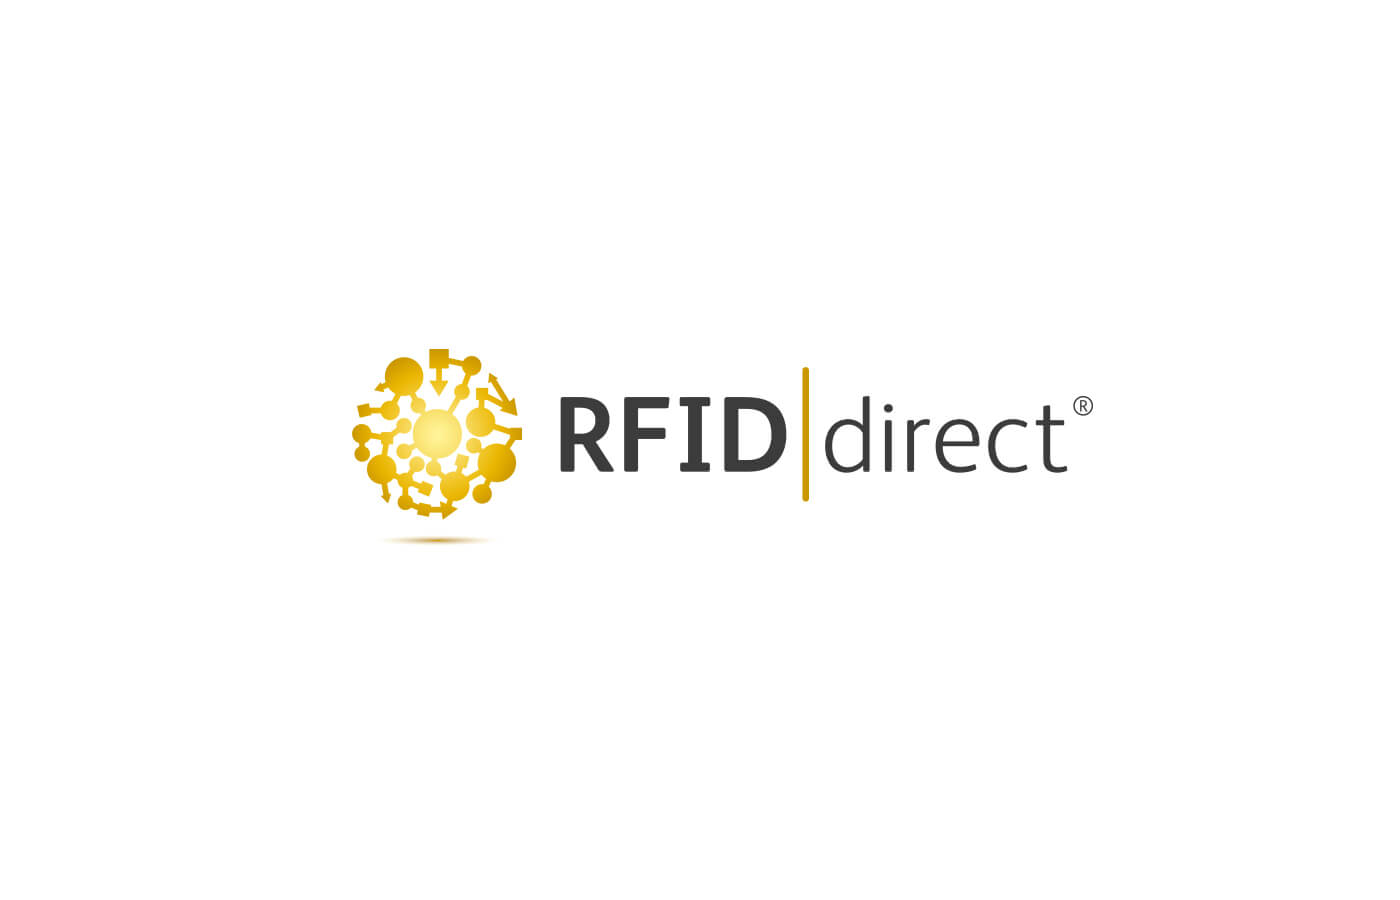 Rapid Fire RFID direct Branding Logo Design